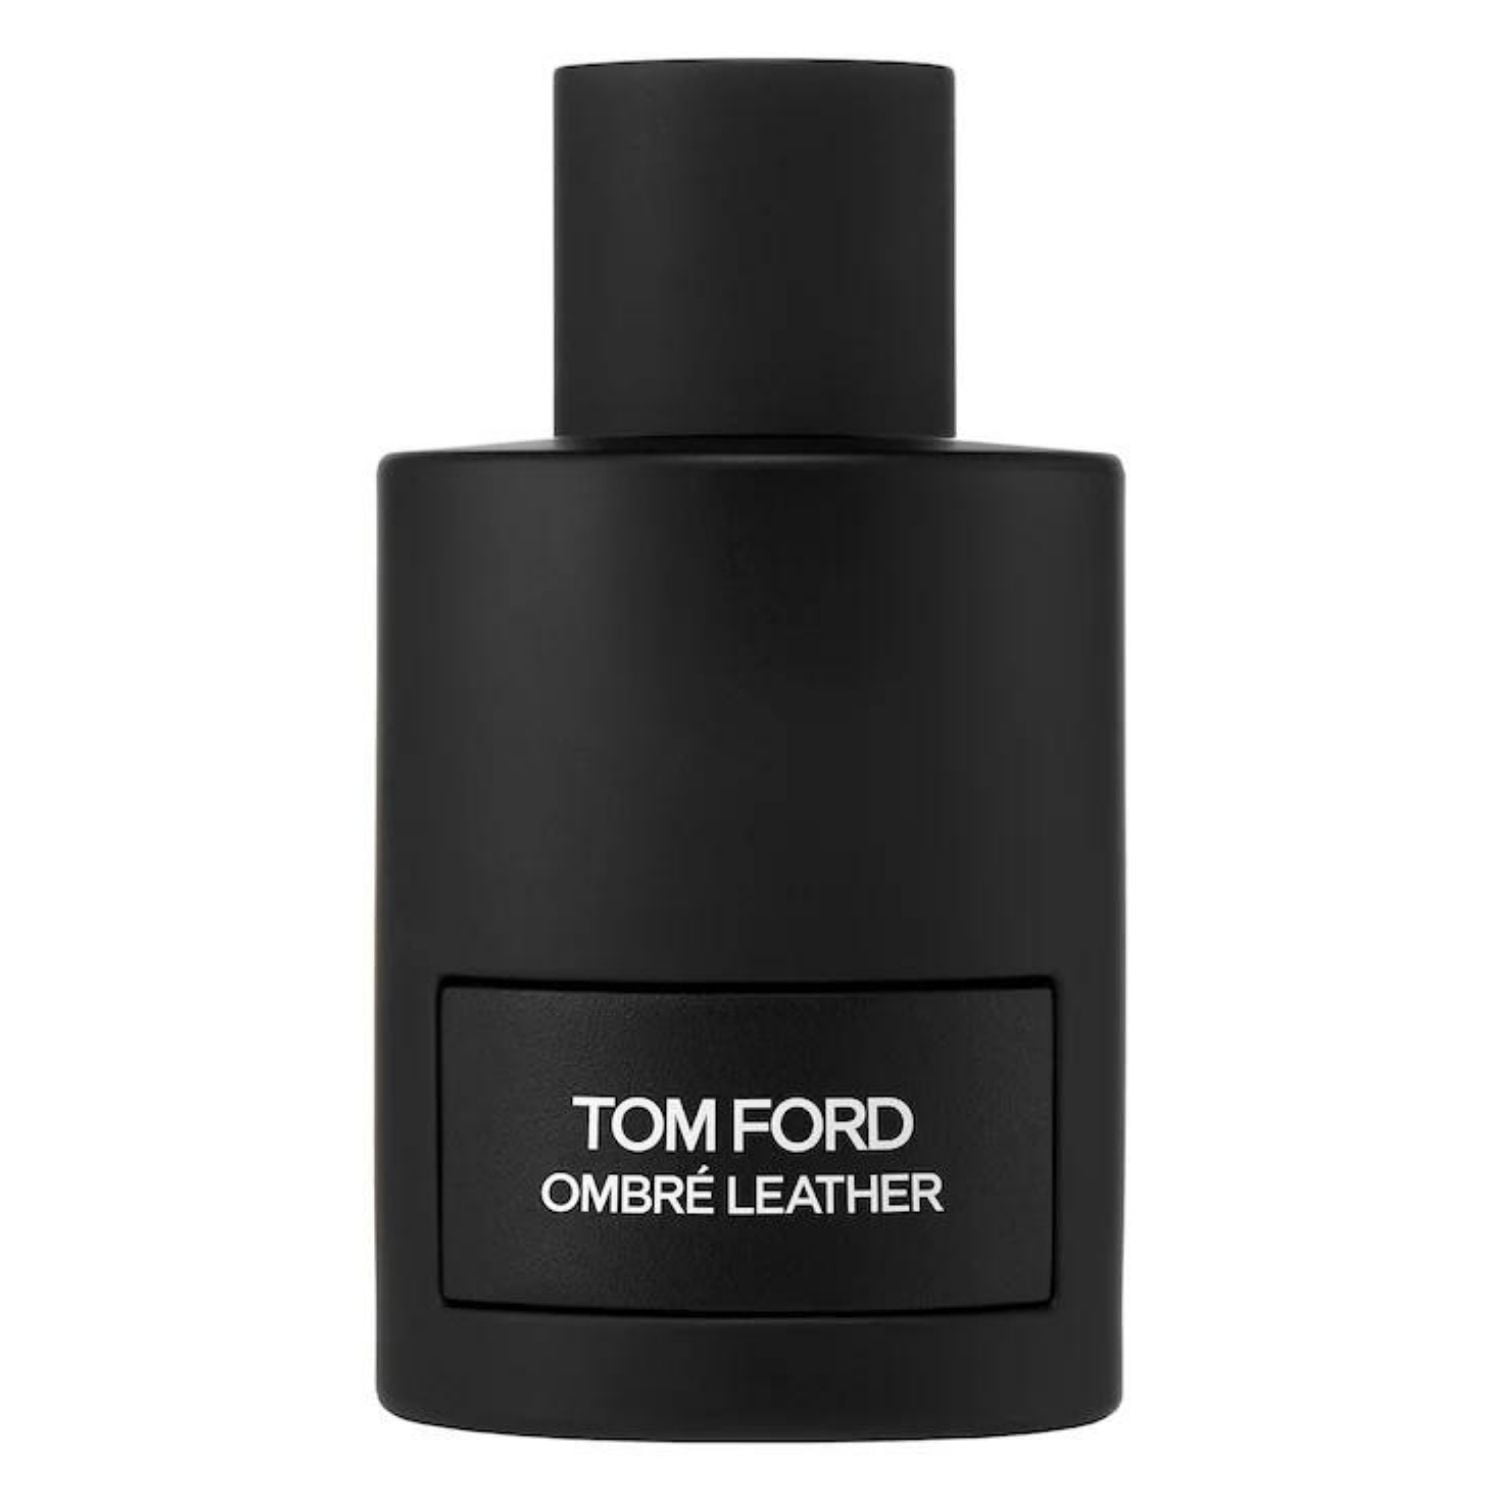 Tom Ford White Patchouli by Tom Ford for Women. Eau De Parfum Spray  3.4-Ounce